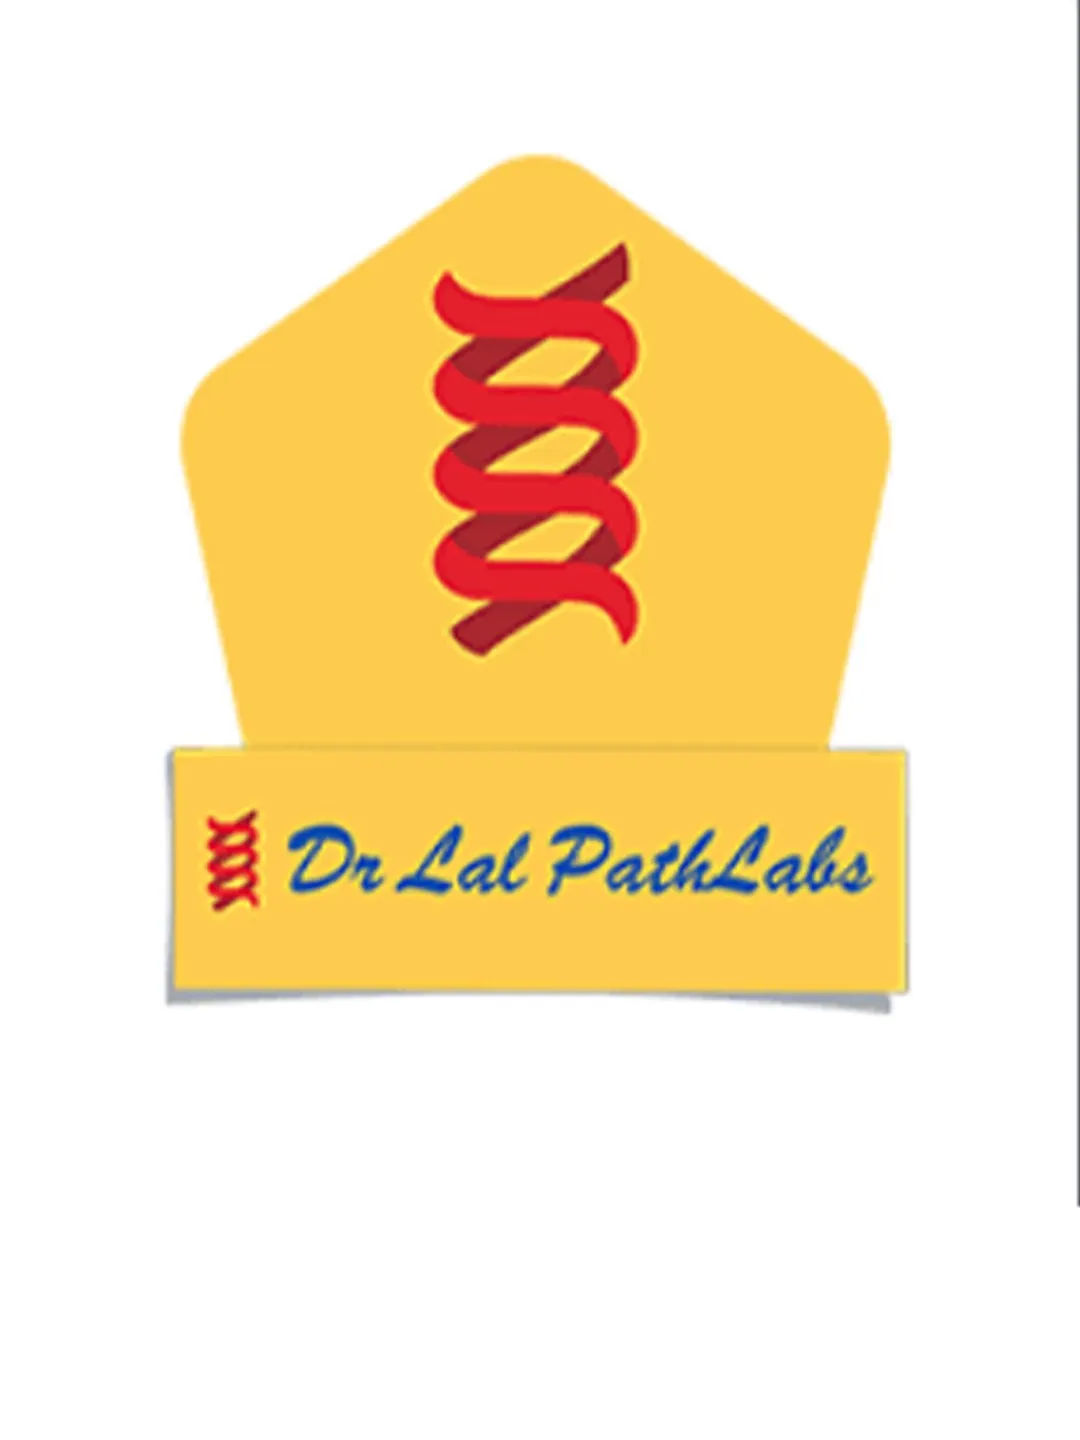 Dr. Lal Pathlabs in Yamuna Vihar,Delhi - Best Diagnostic Centres in Delhi -  Justdial